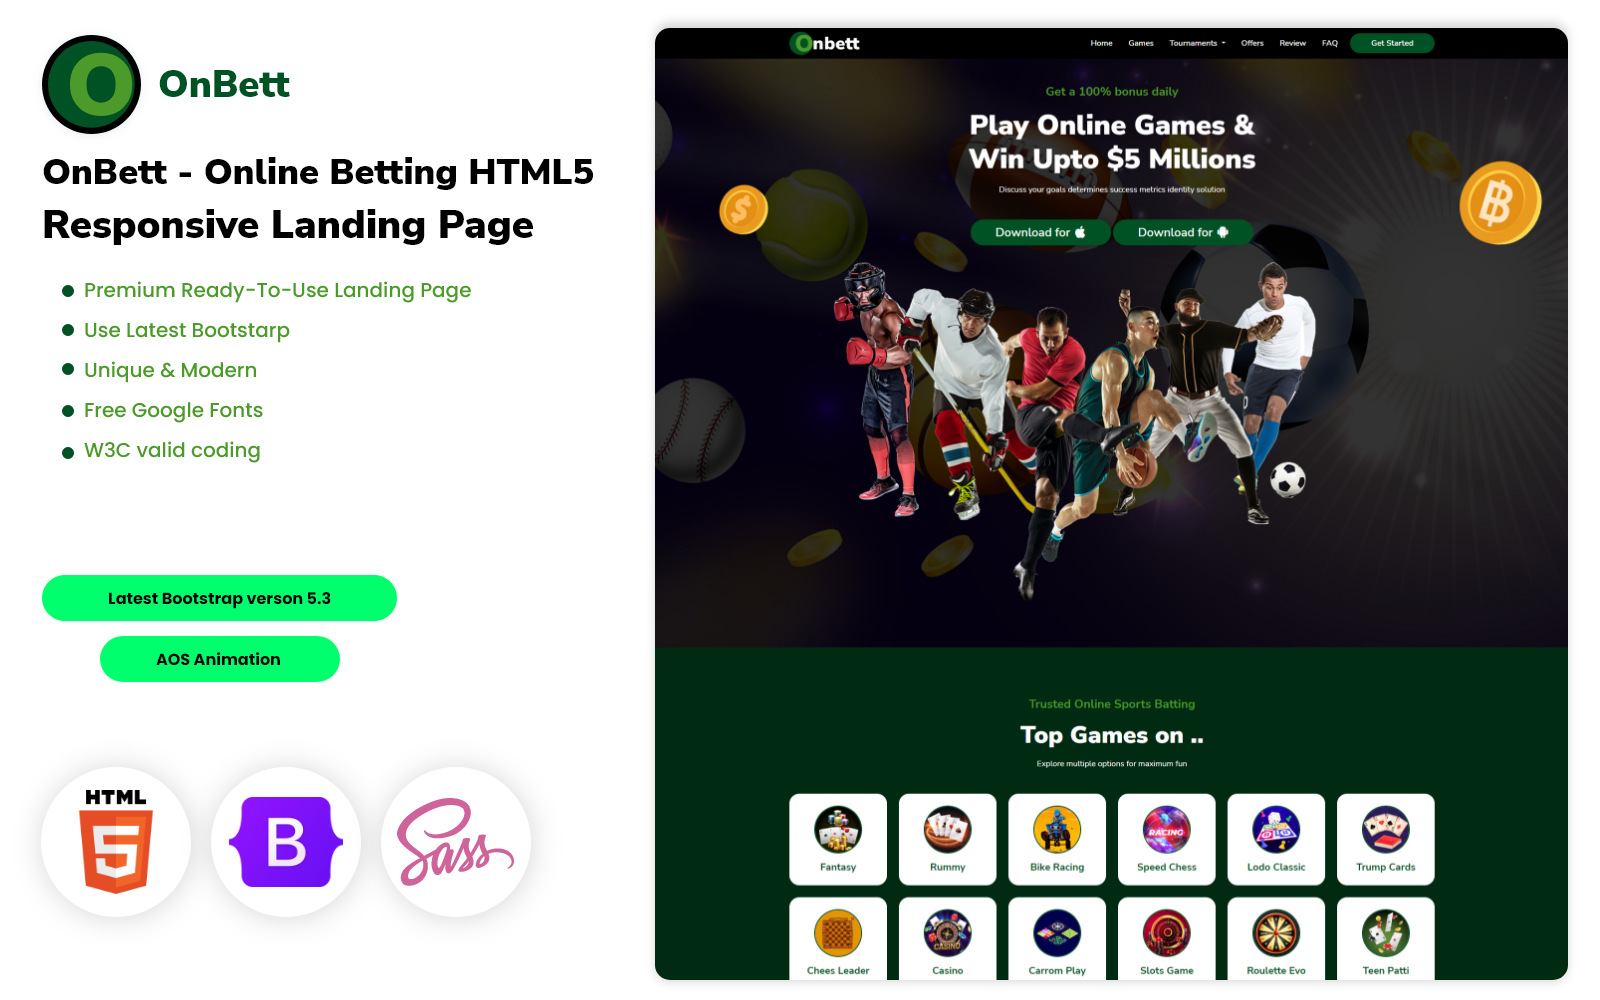 OnBett - Online Betting HTML5 Responsive Landing Page